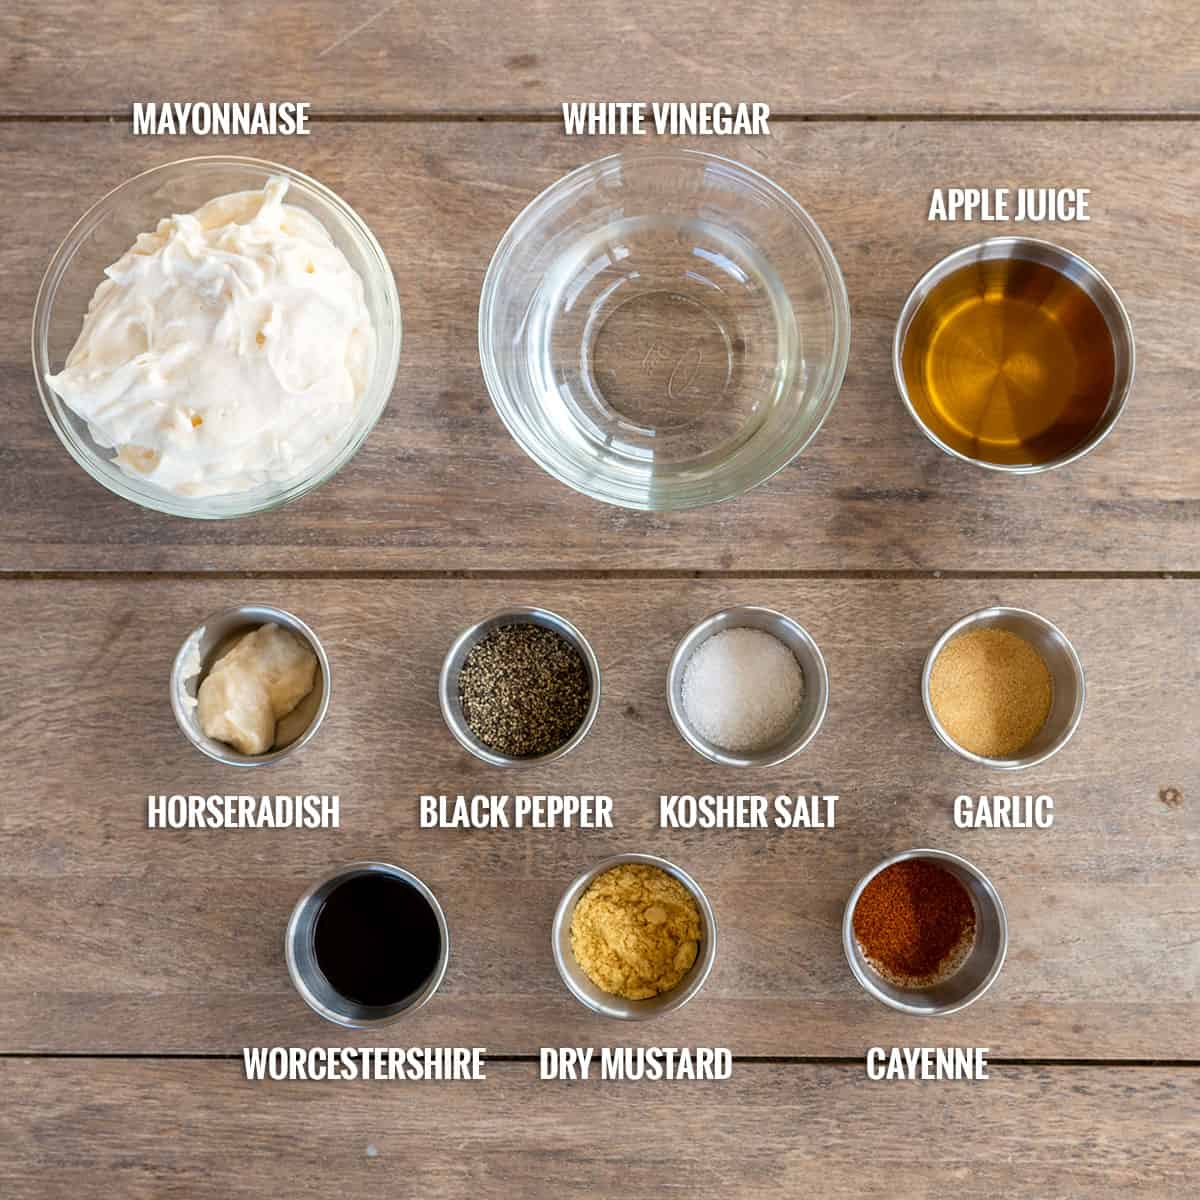 Alabama white sauce ingredients: Mayo, vinegar, apple juice, horseradish, black pepper, kosher salt, garlic, Worcestershire, dry mustard, cayenne.